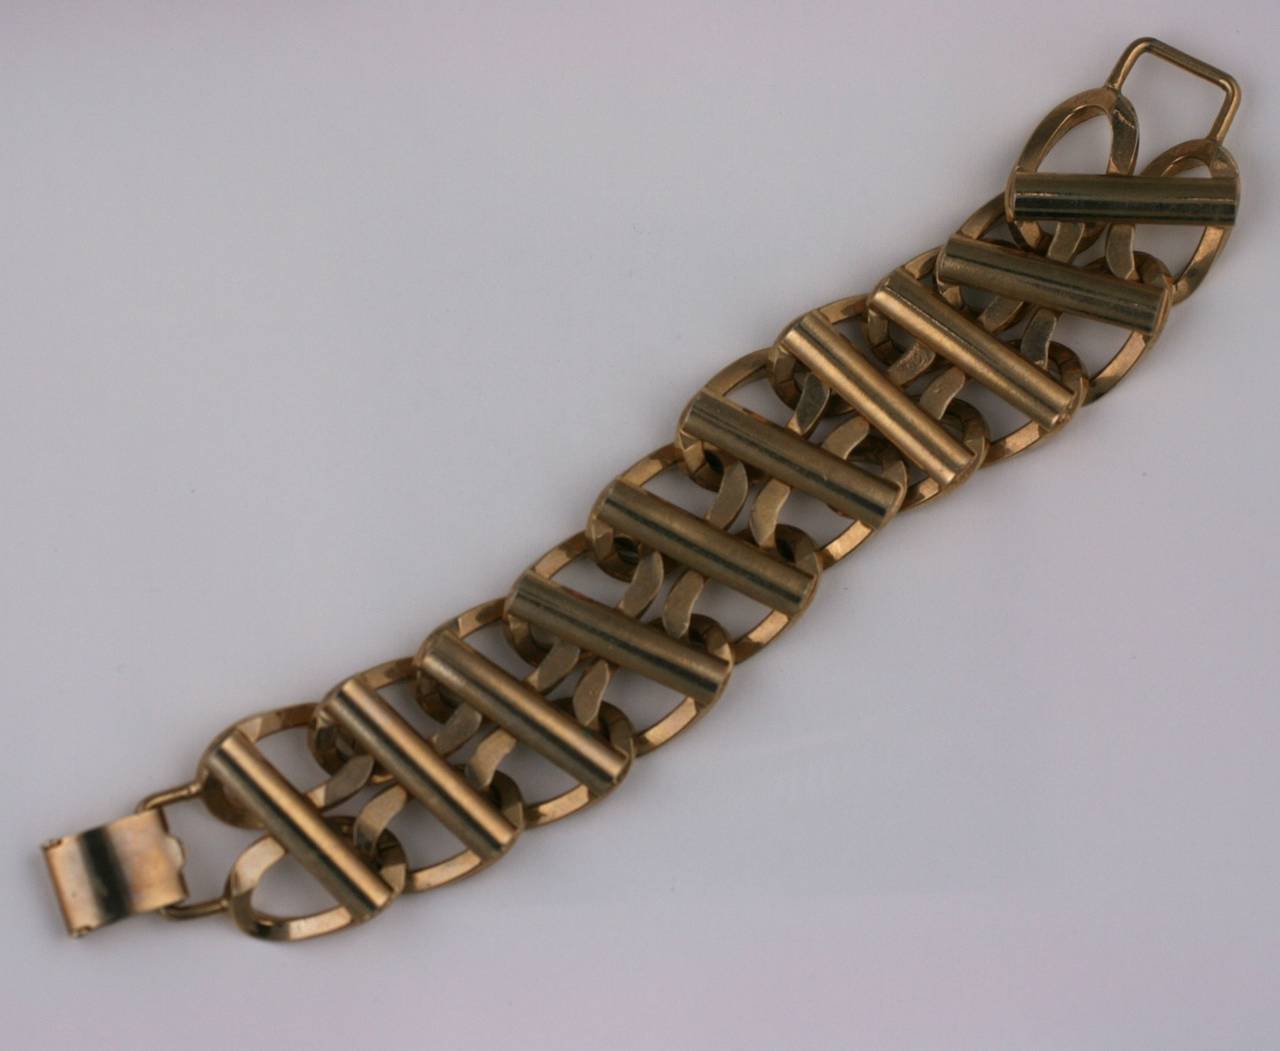 Chunky Bartek gilt chain link Retro bracelet. circa 1940s, USA. 
Length 8